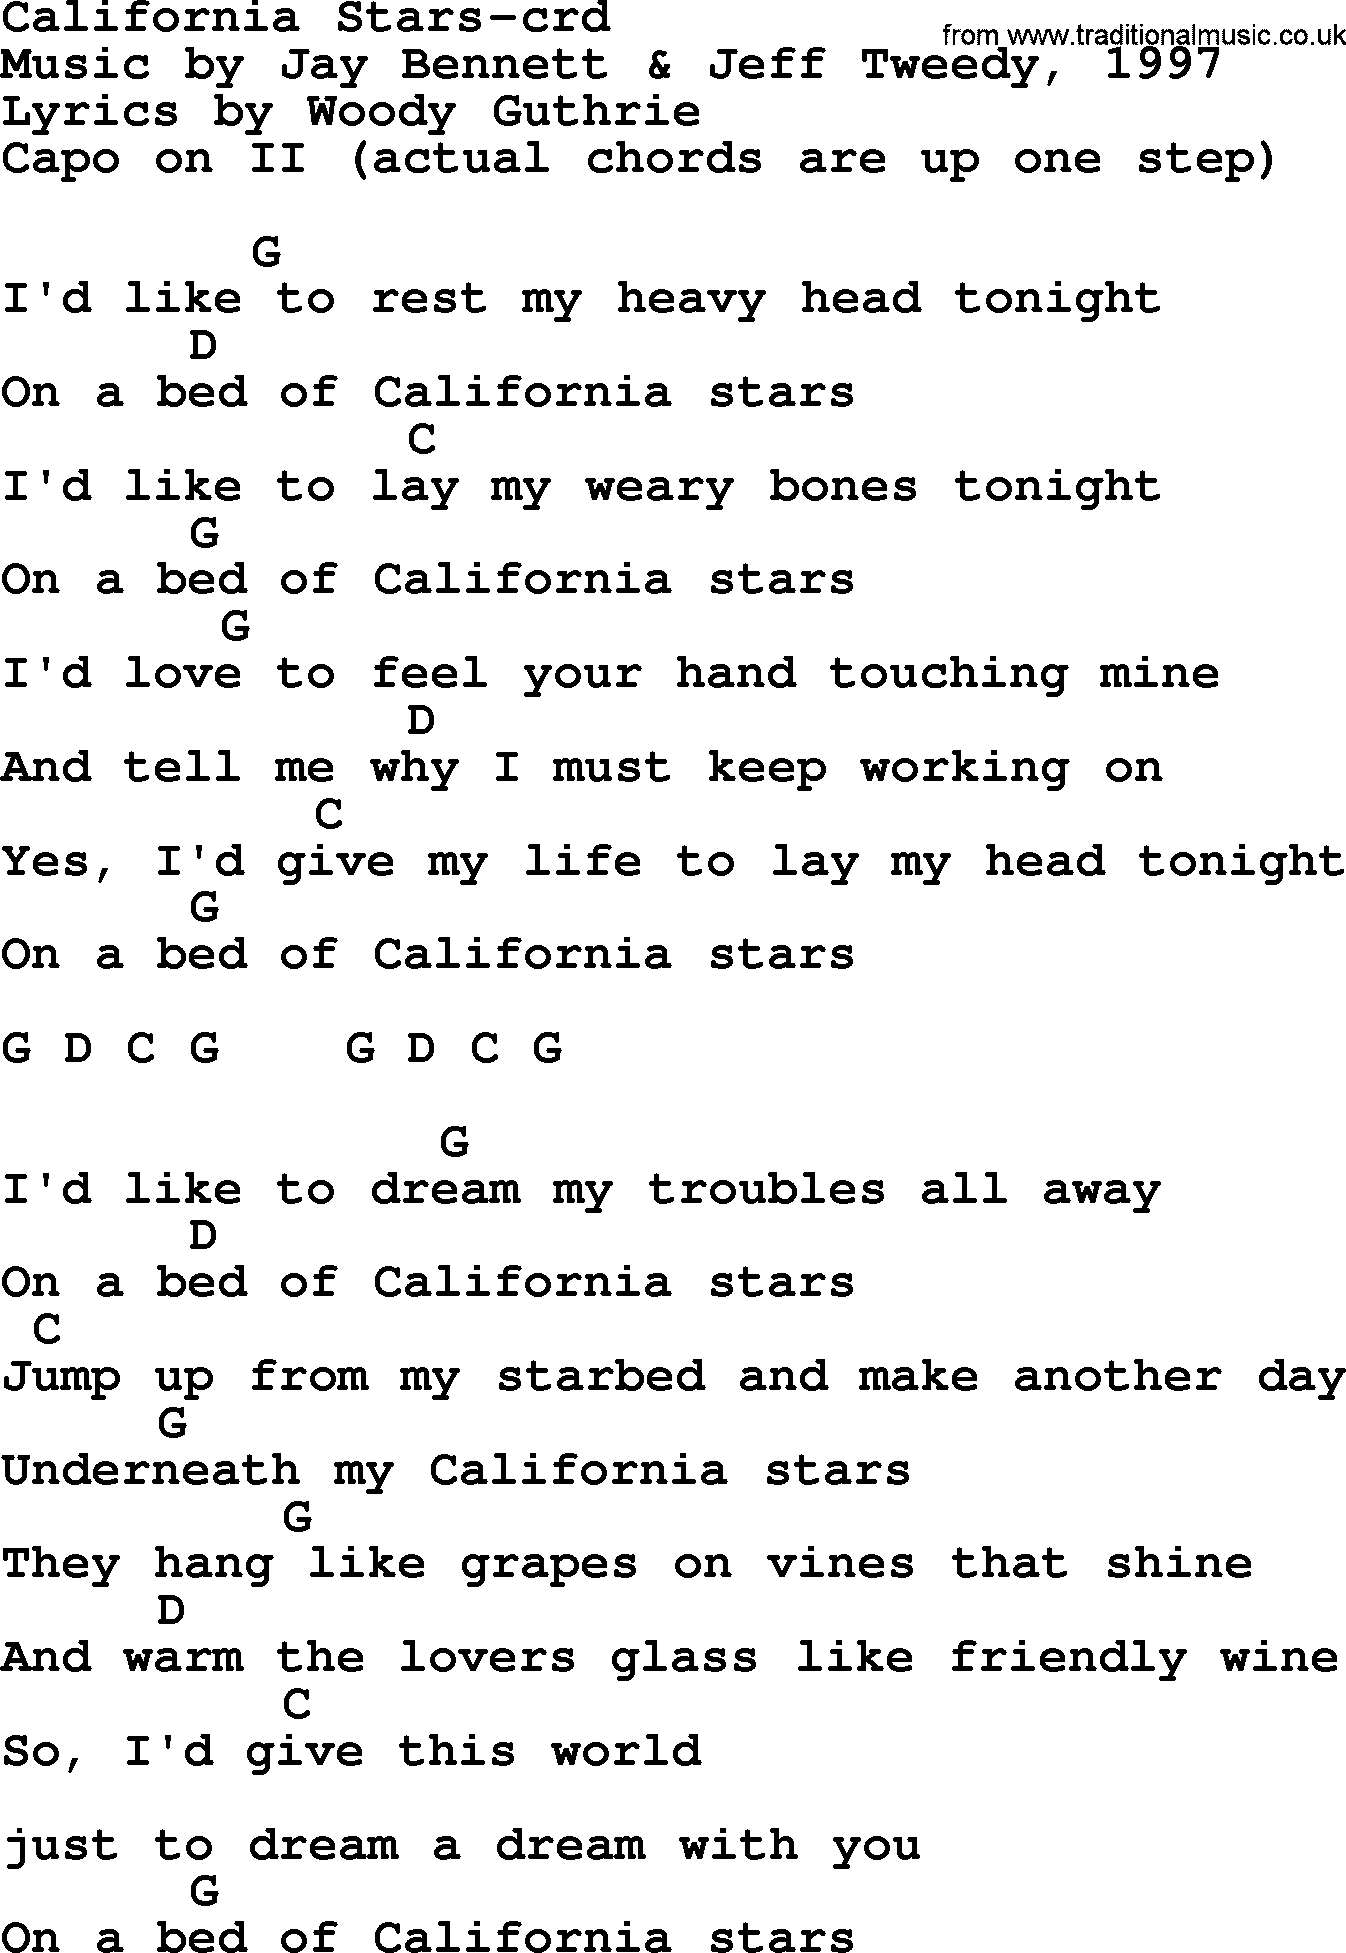 Woody Guthrie song California Stars lyrics and chords